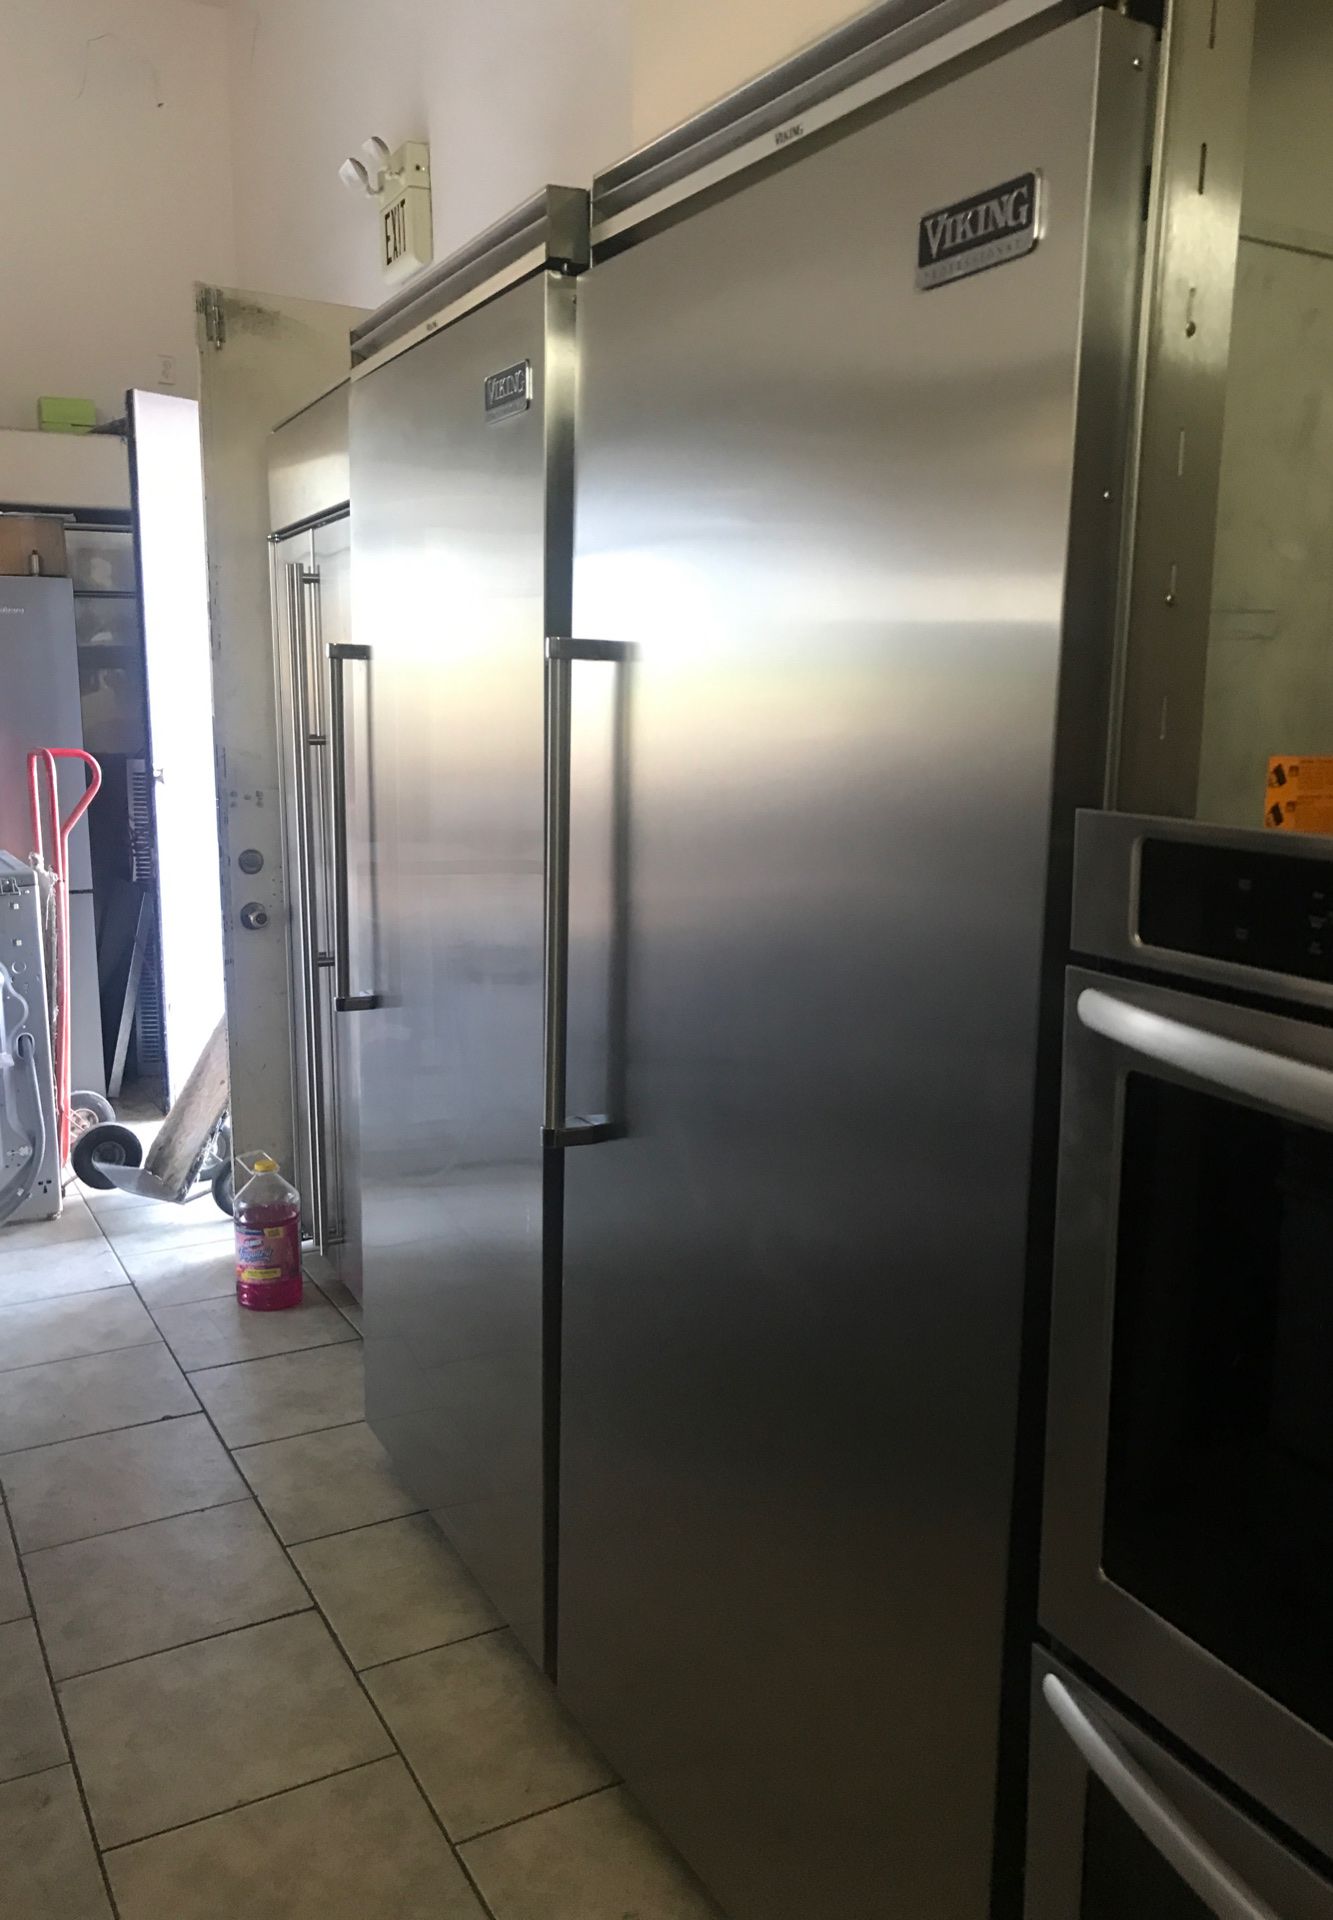 Viking single refrigerators